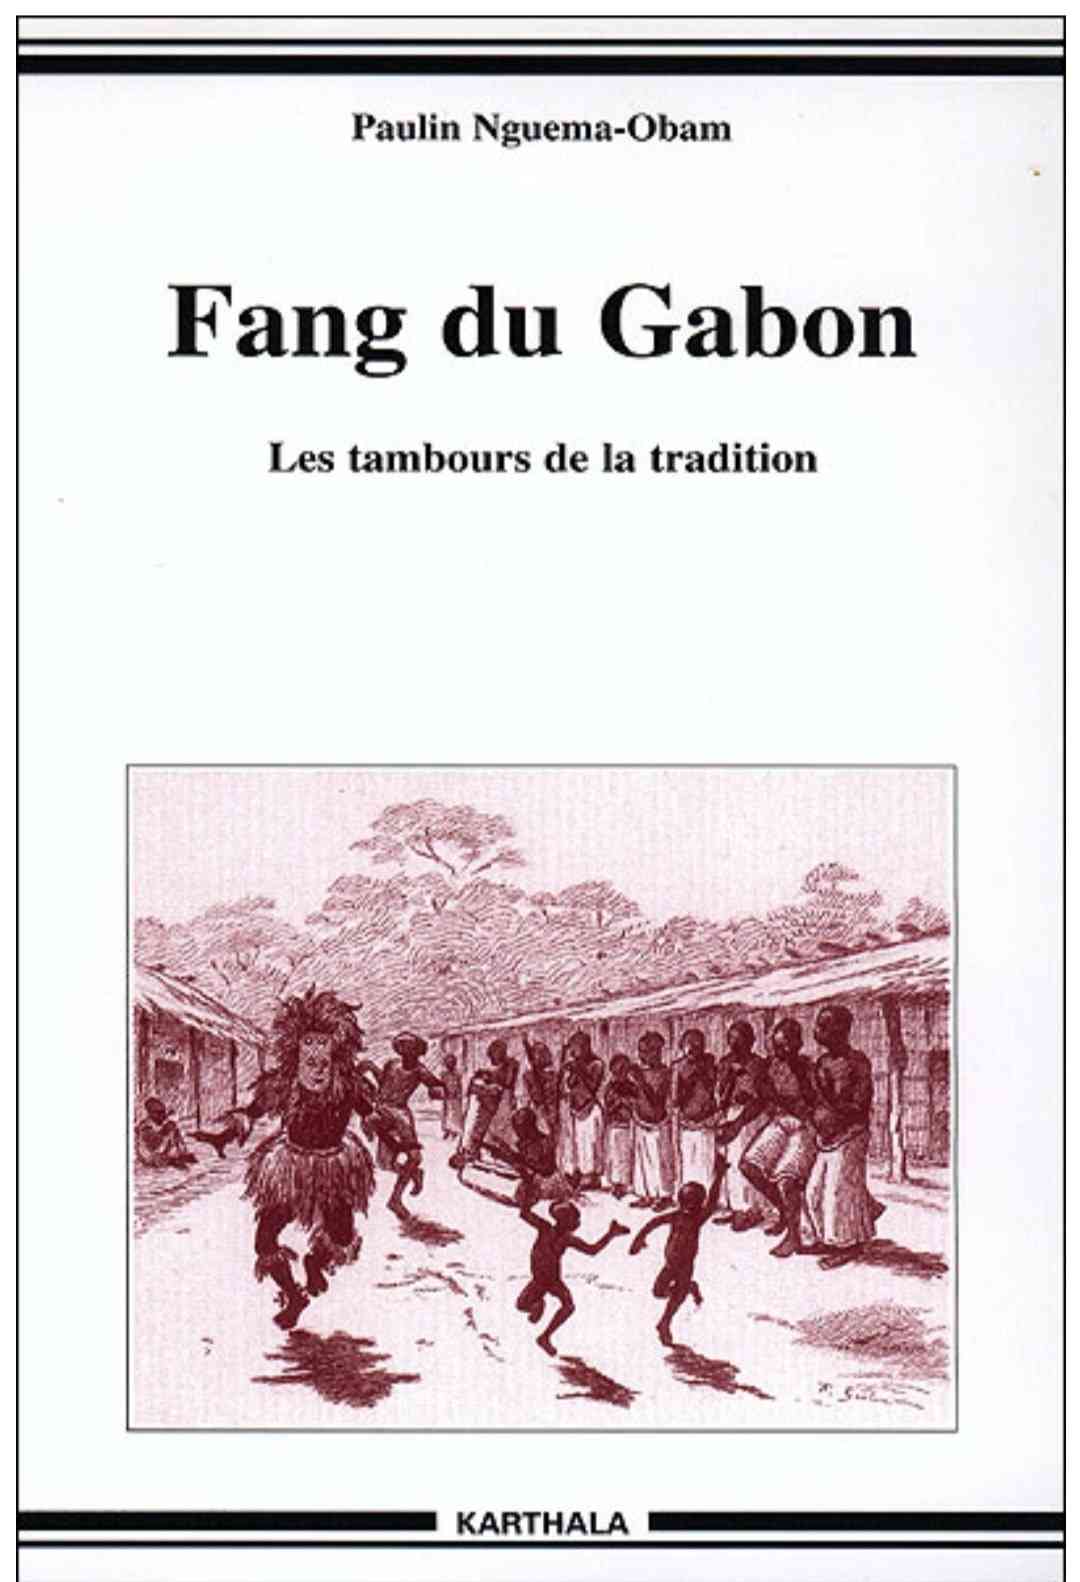 Paulin Nguema Obam - Fang du Gabon